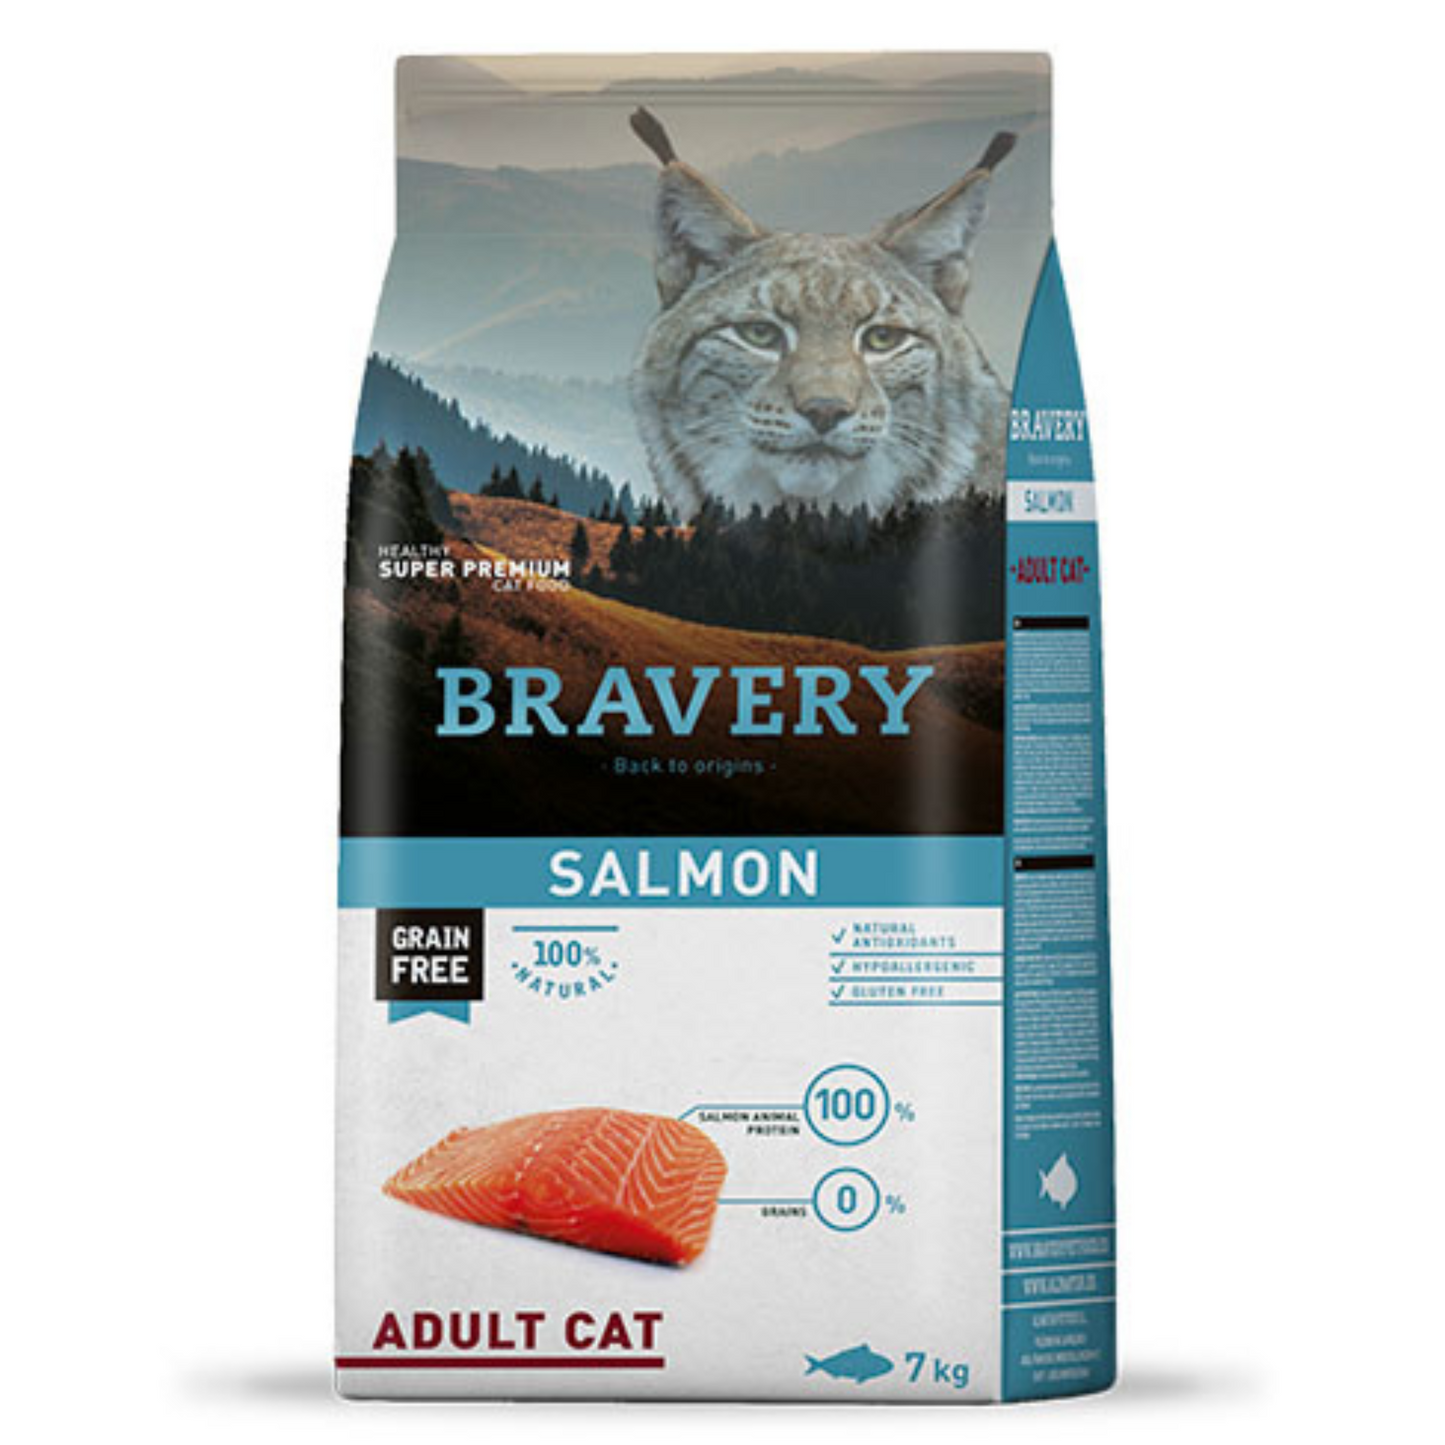 Bravery Salmon Adult Cat 7 kg